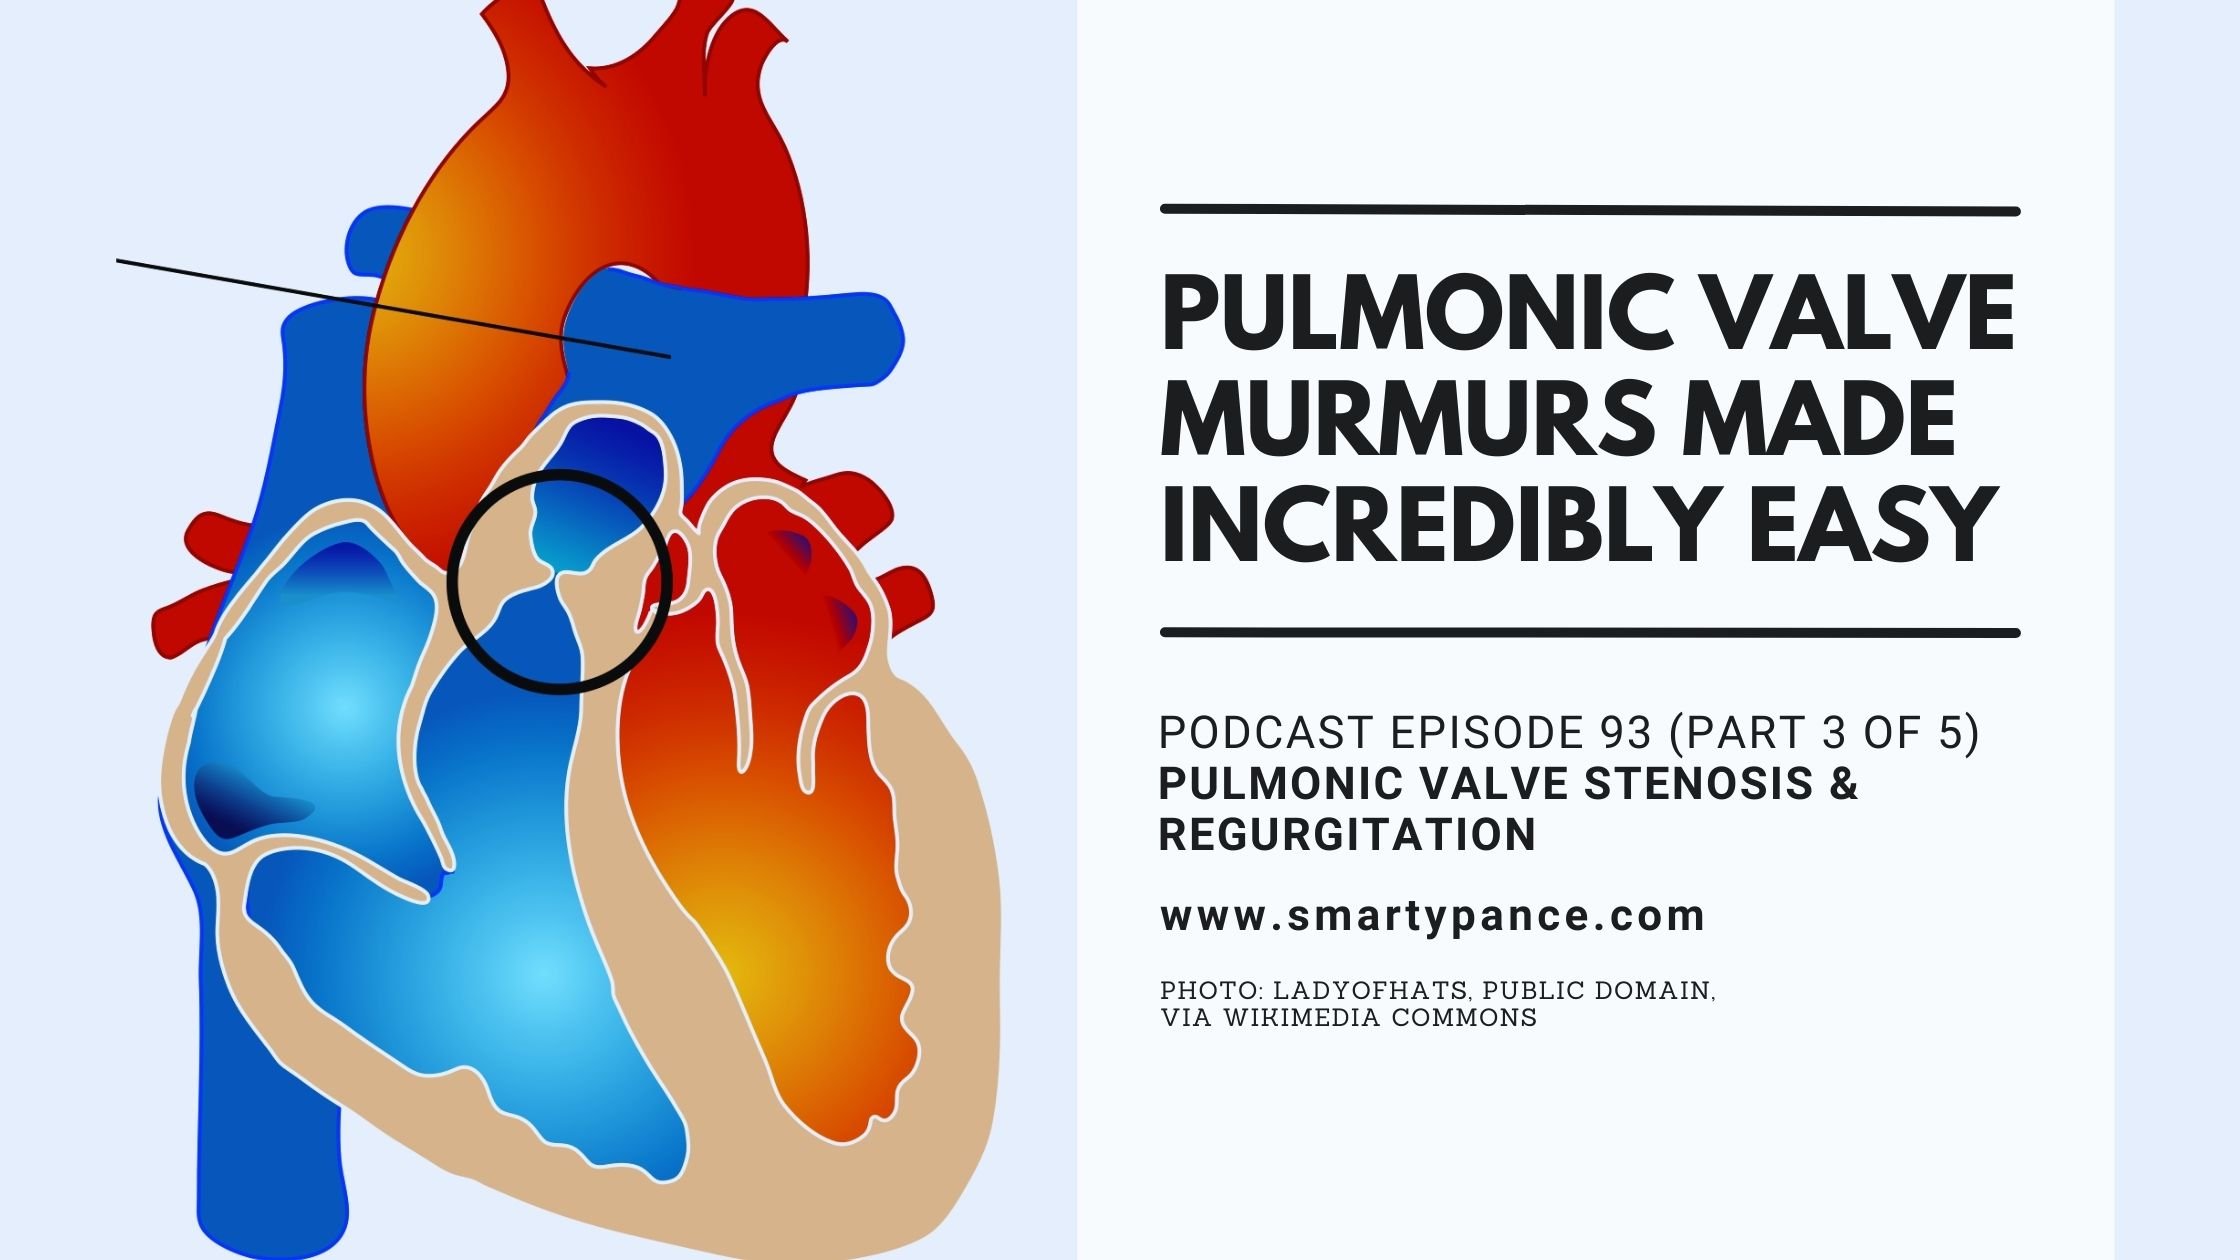 Podcast Episode 93 - Cardiac Murmurs Made Incredibly Easy (Part 3 of 5) – Pulmonary Valve Stenosis and Regurgitation